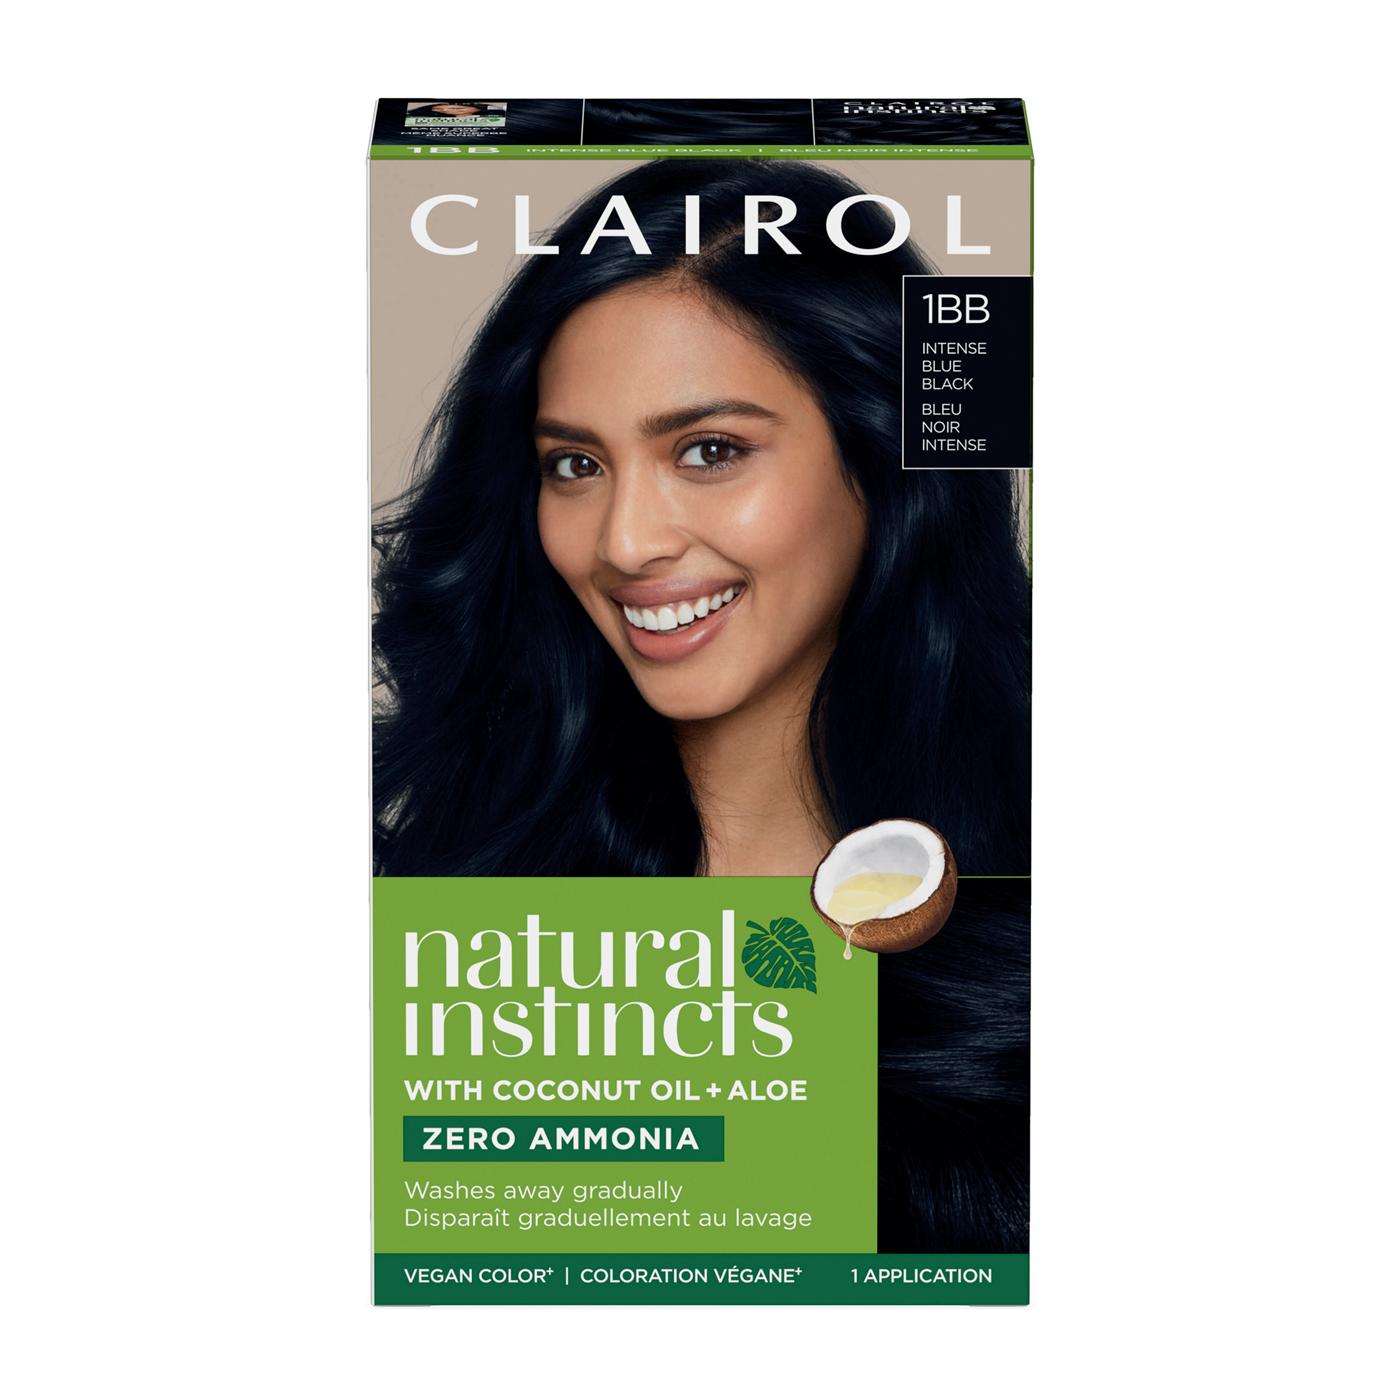 Clairol Natural Instincts Vegan Demi-Permanent Hair Color - 1BB Intense Blue Black; image 1 of 10